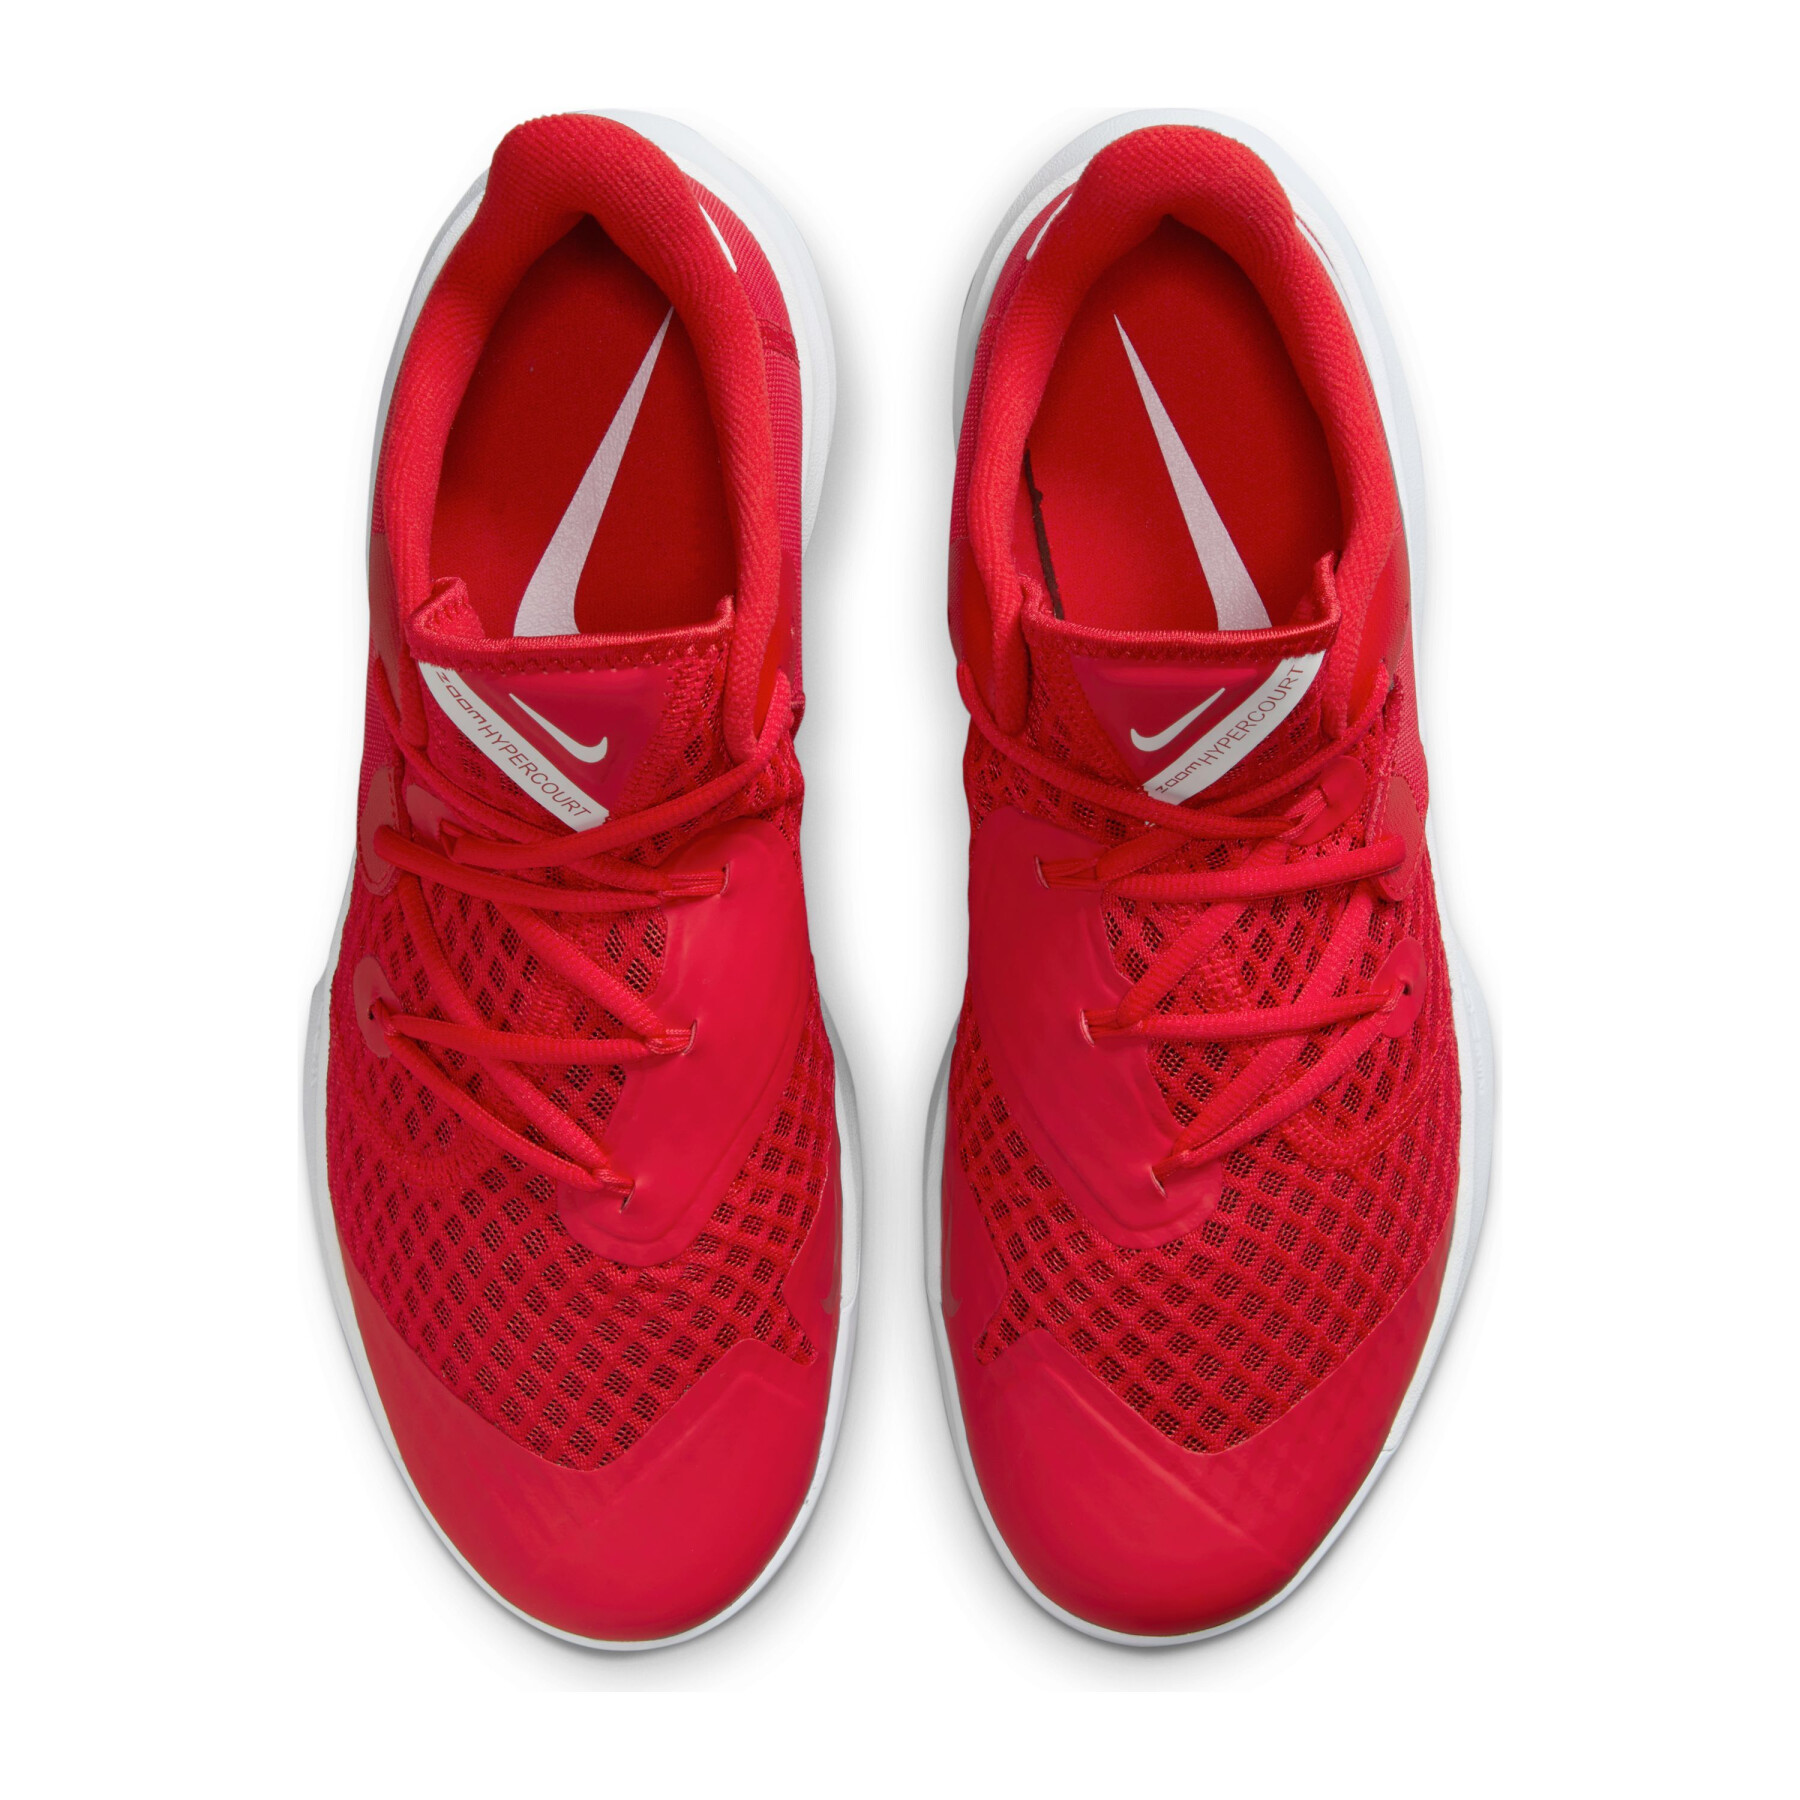 Skor Nike Hyperspeed Court